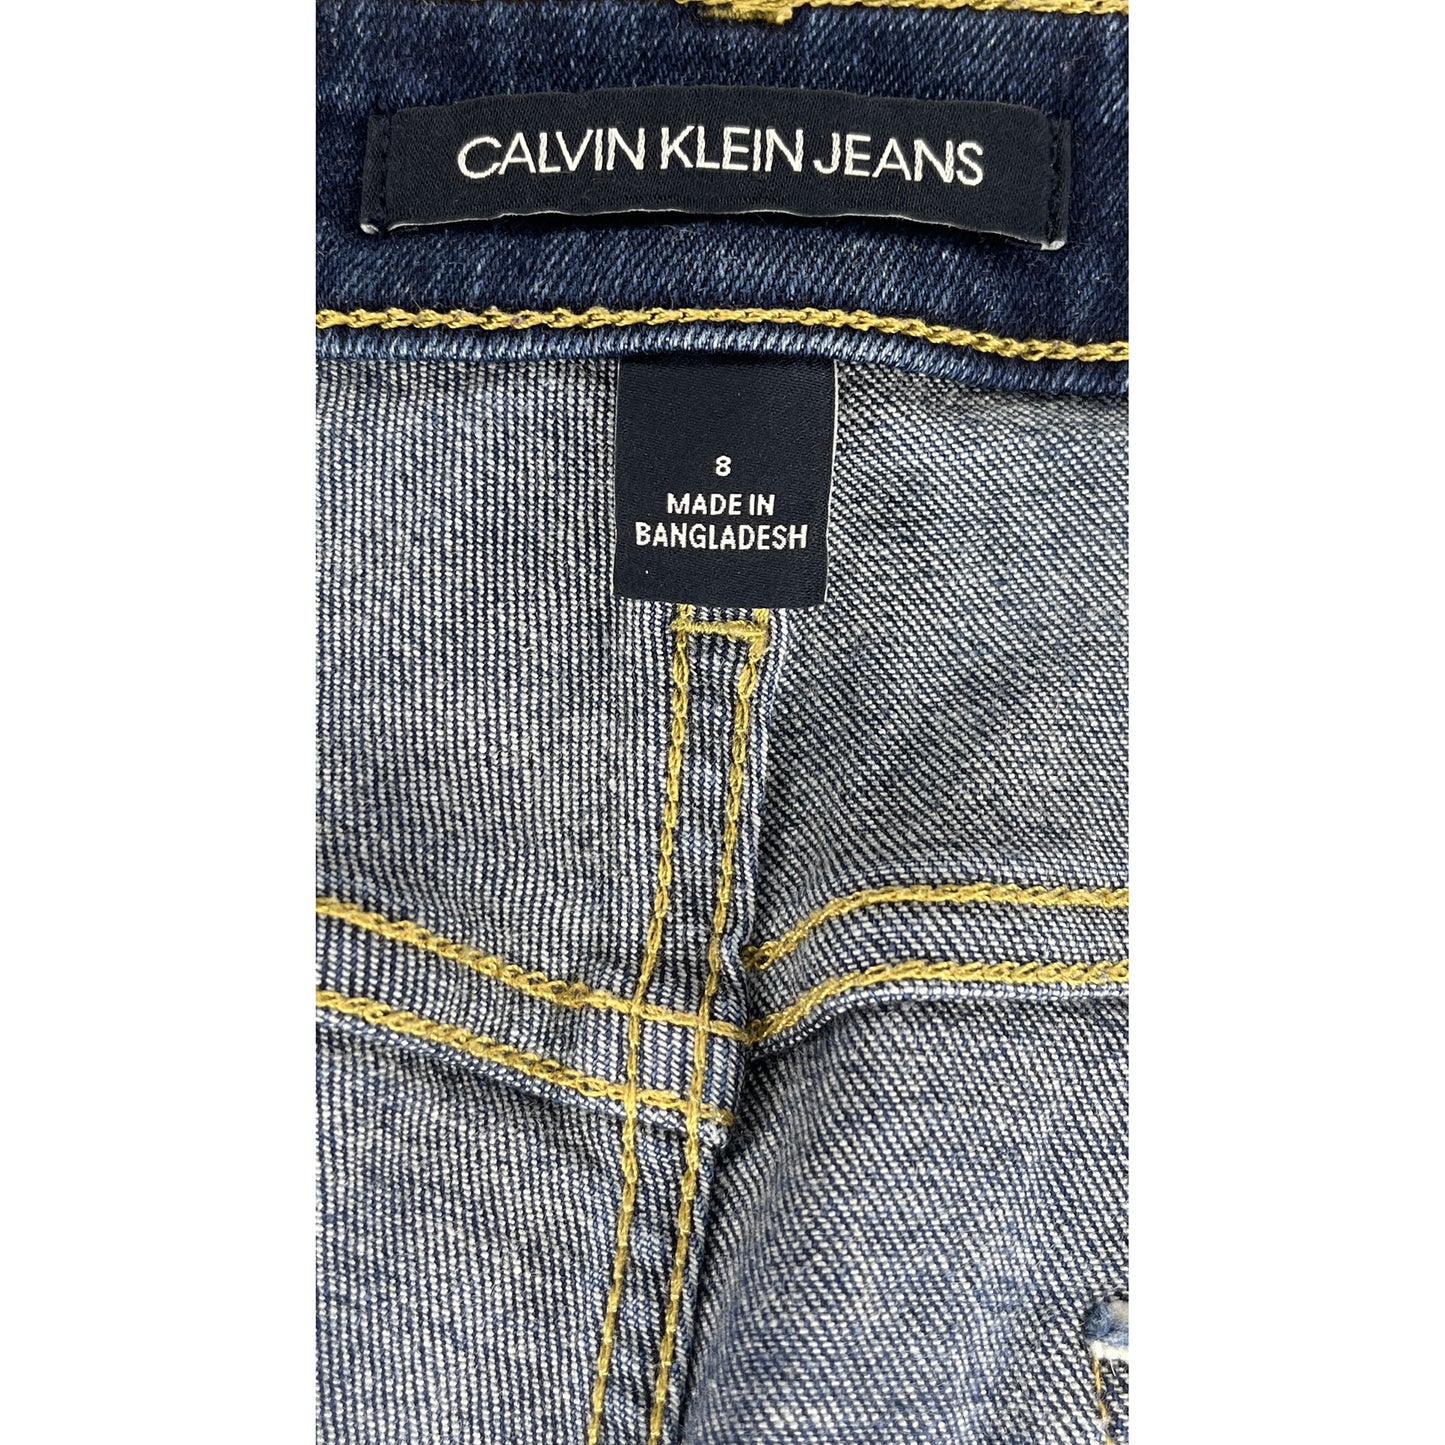 Calvin Klein Denim Bermuda Shorts Dark Blue Size 8 SKU 000425-3